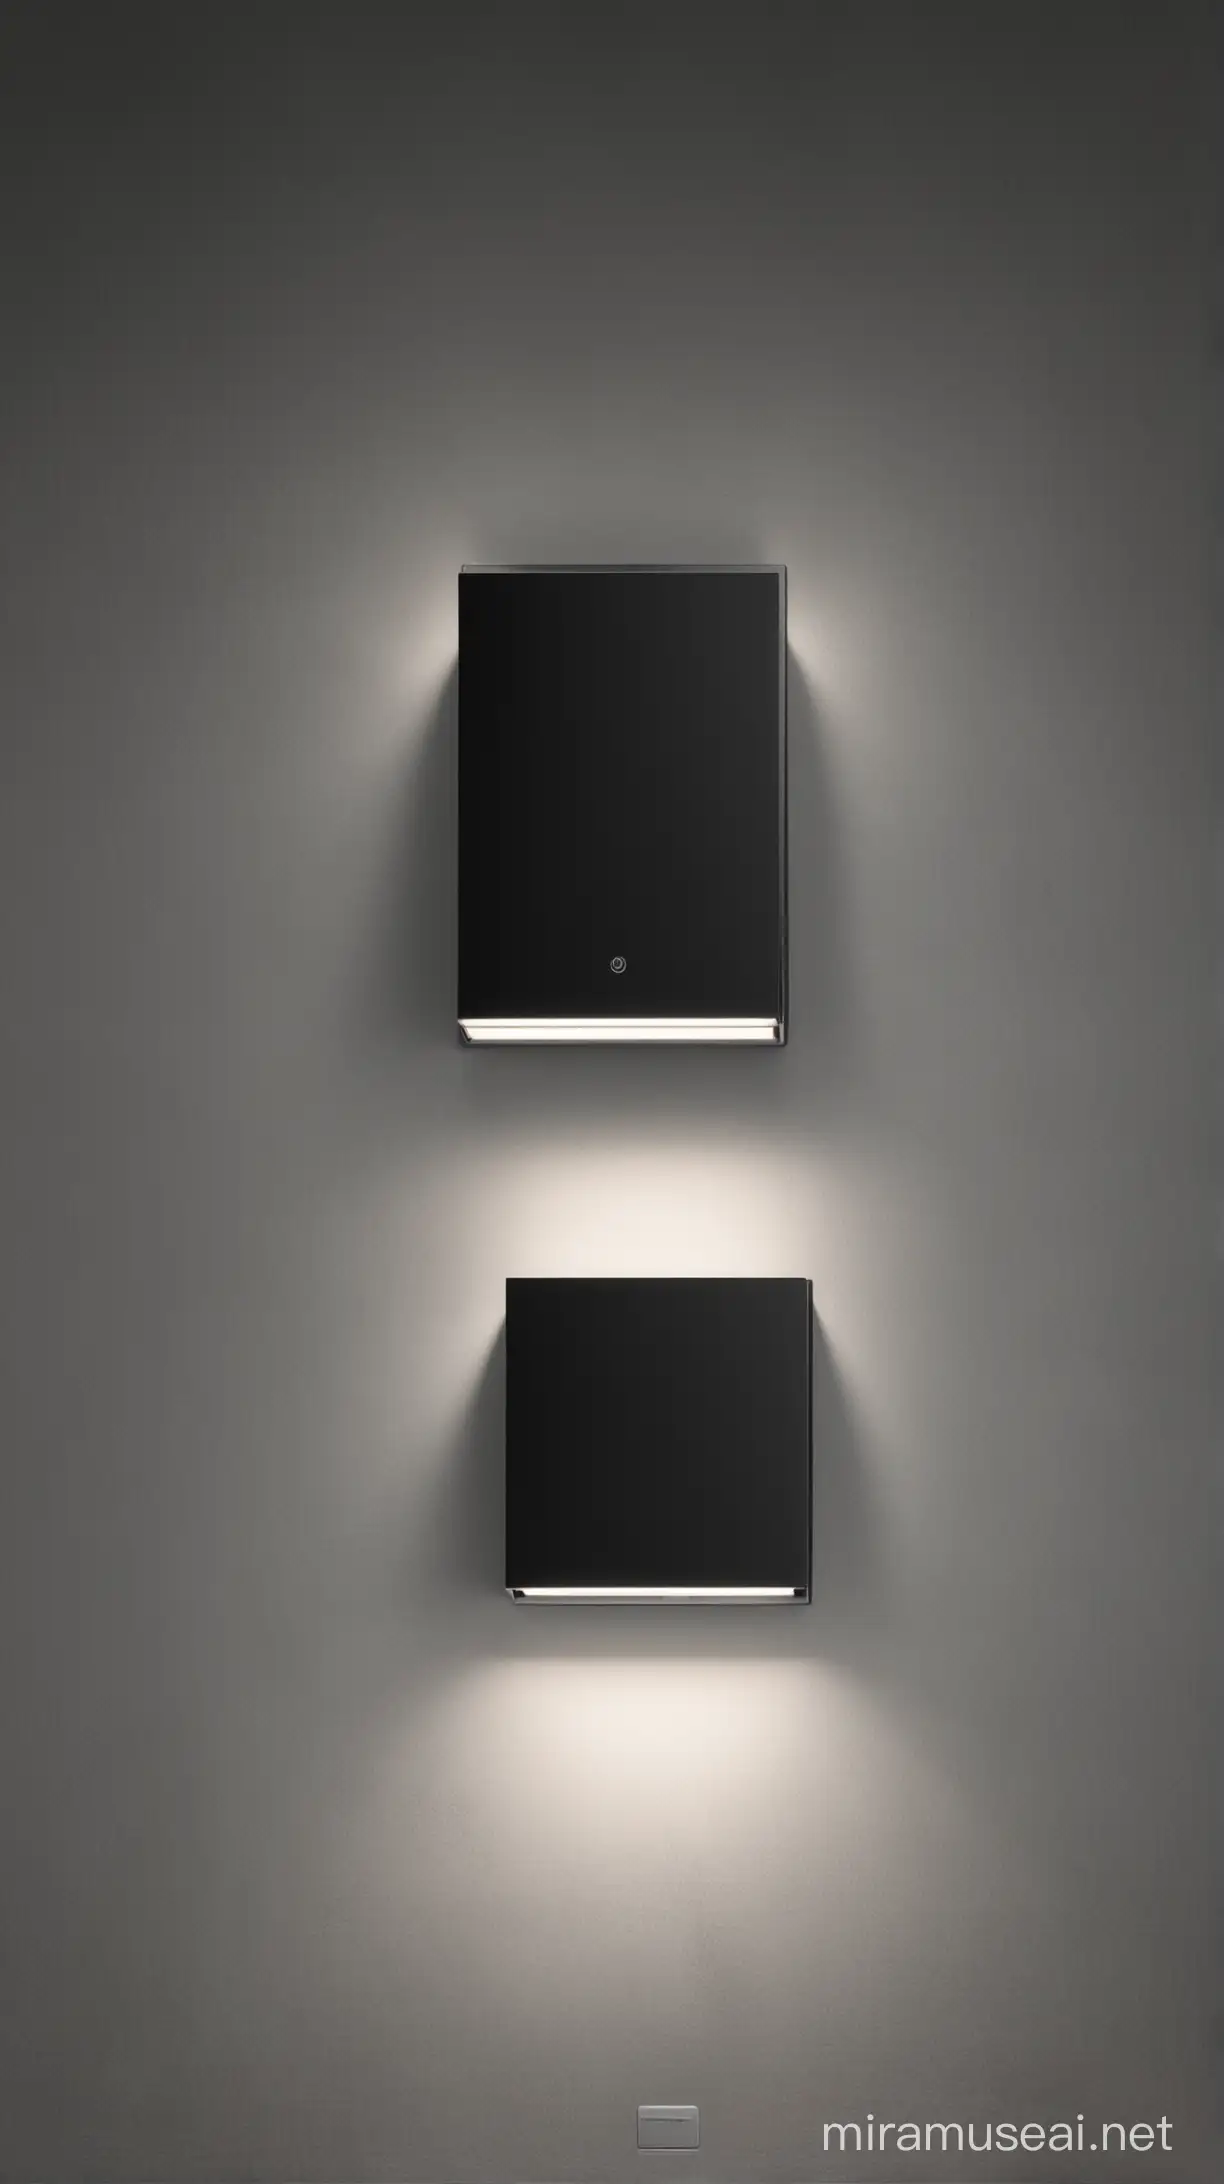 Dark Room with Zero Power Light Illumination